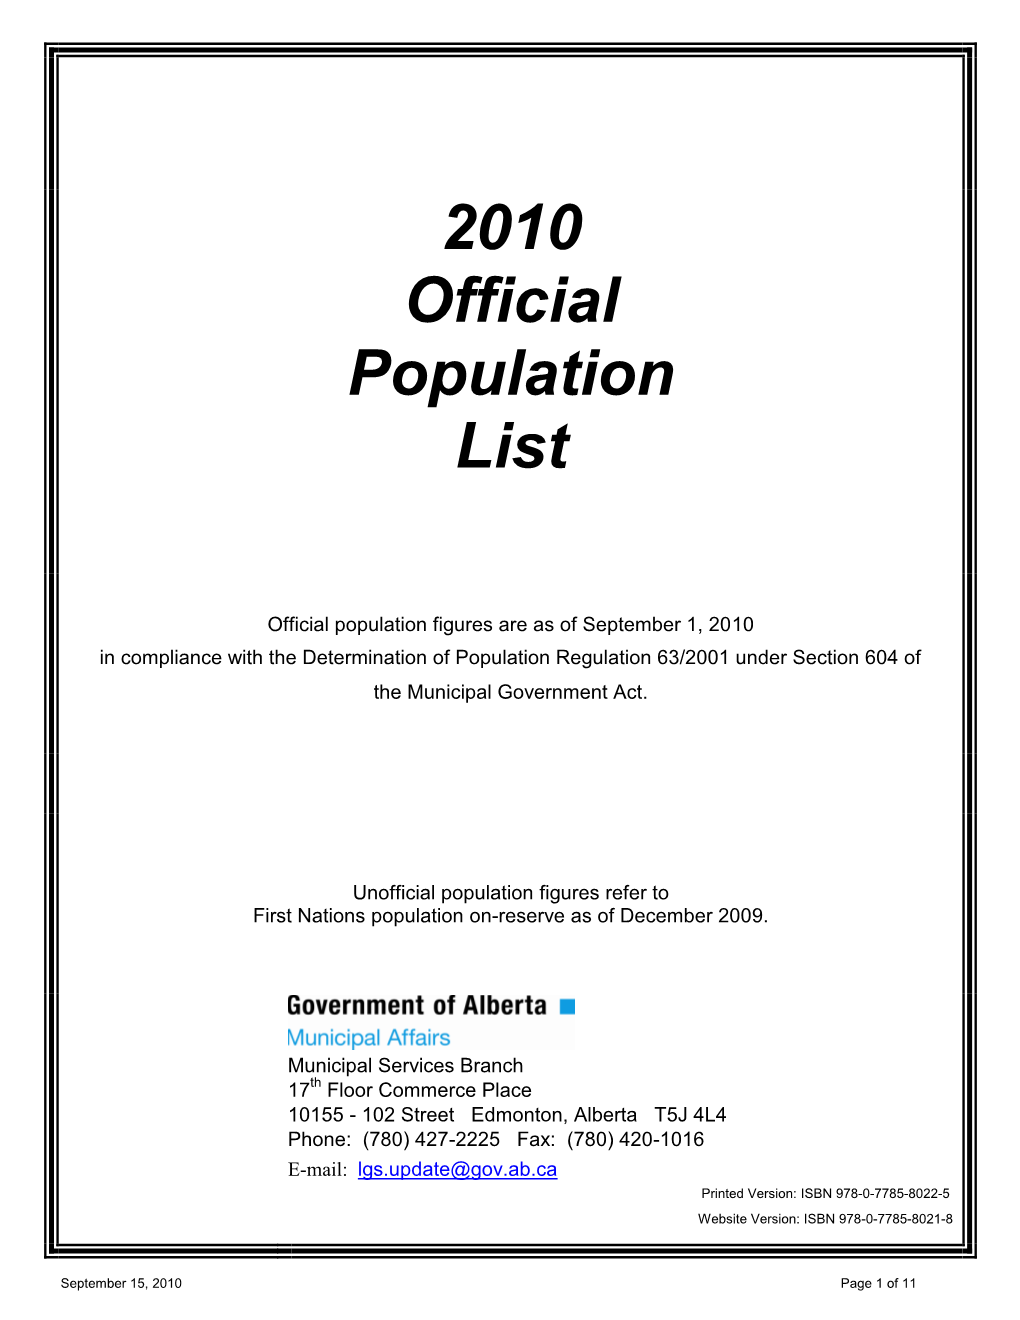 2010 Official Population List